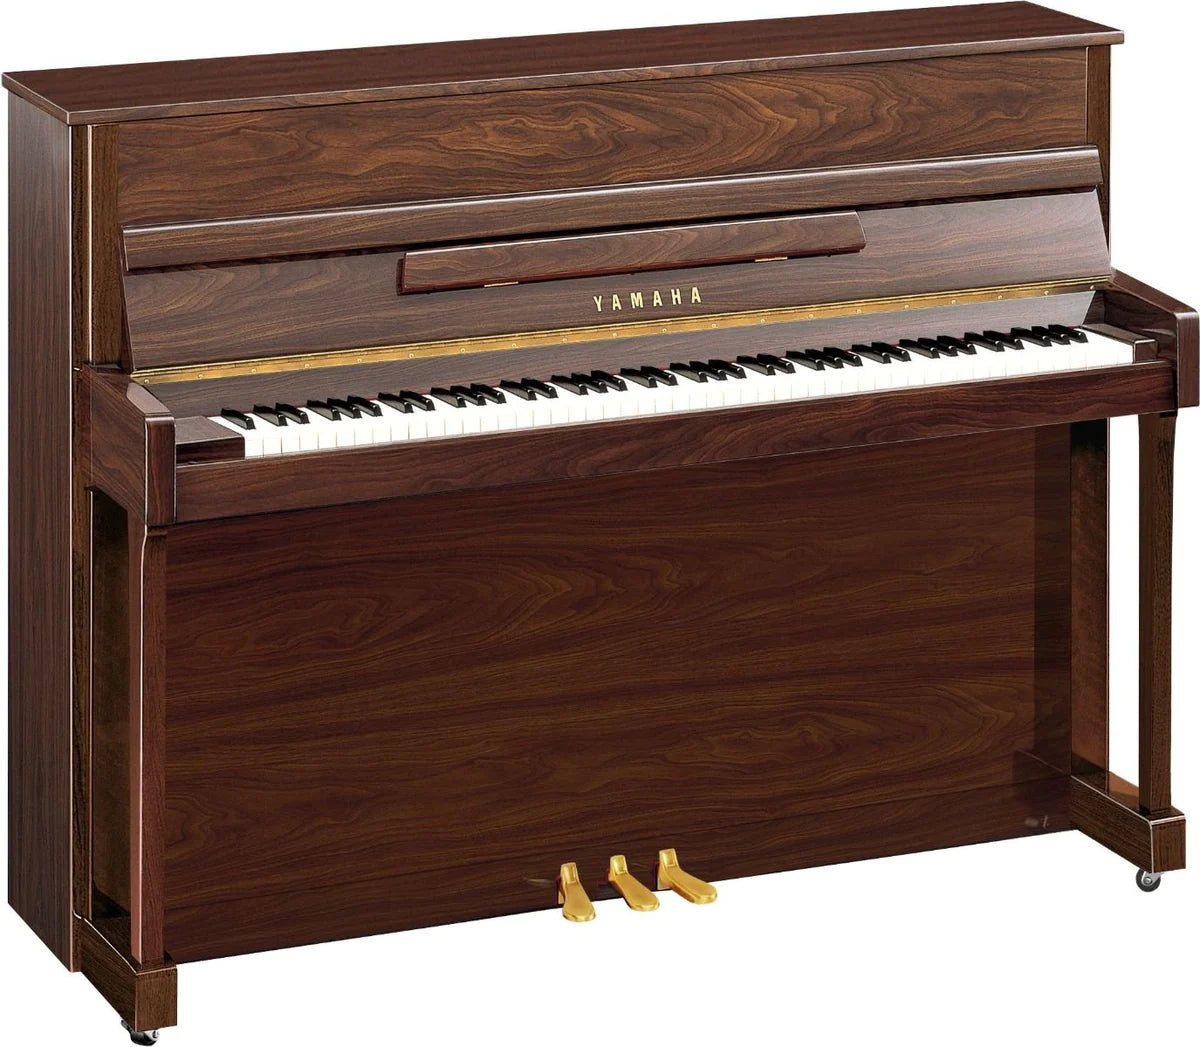 Upright pianos